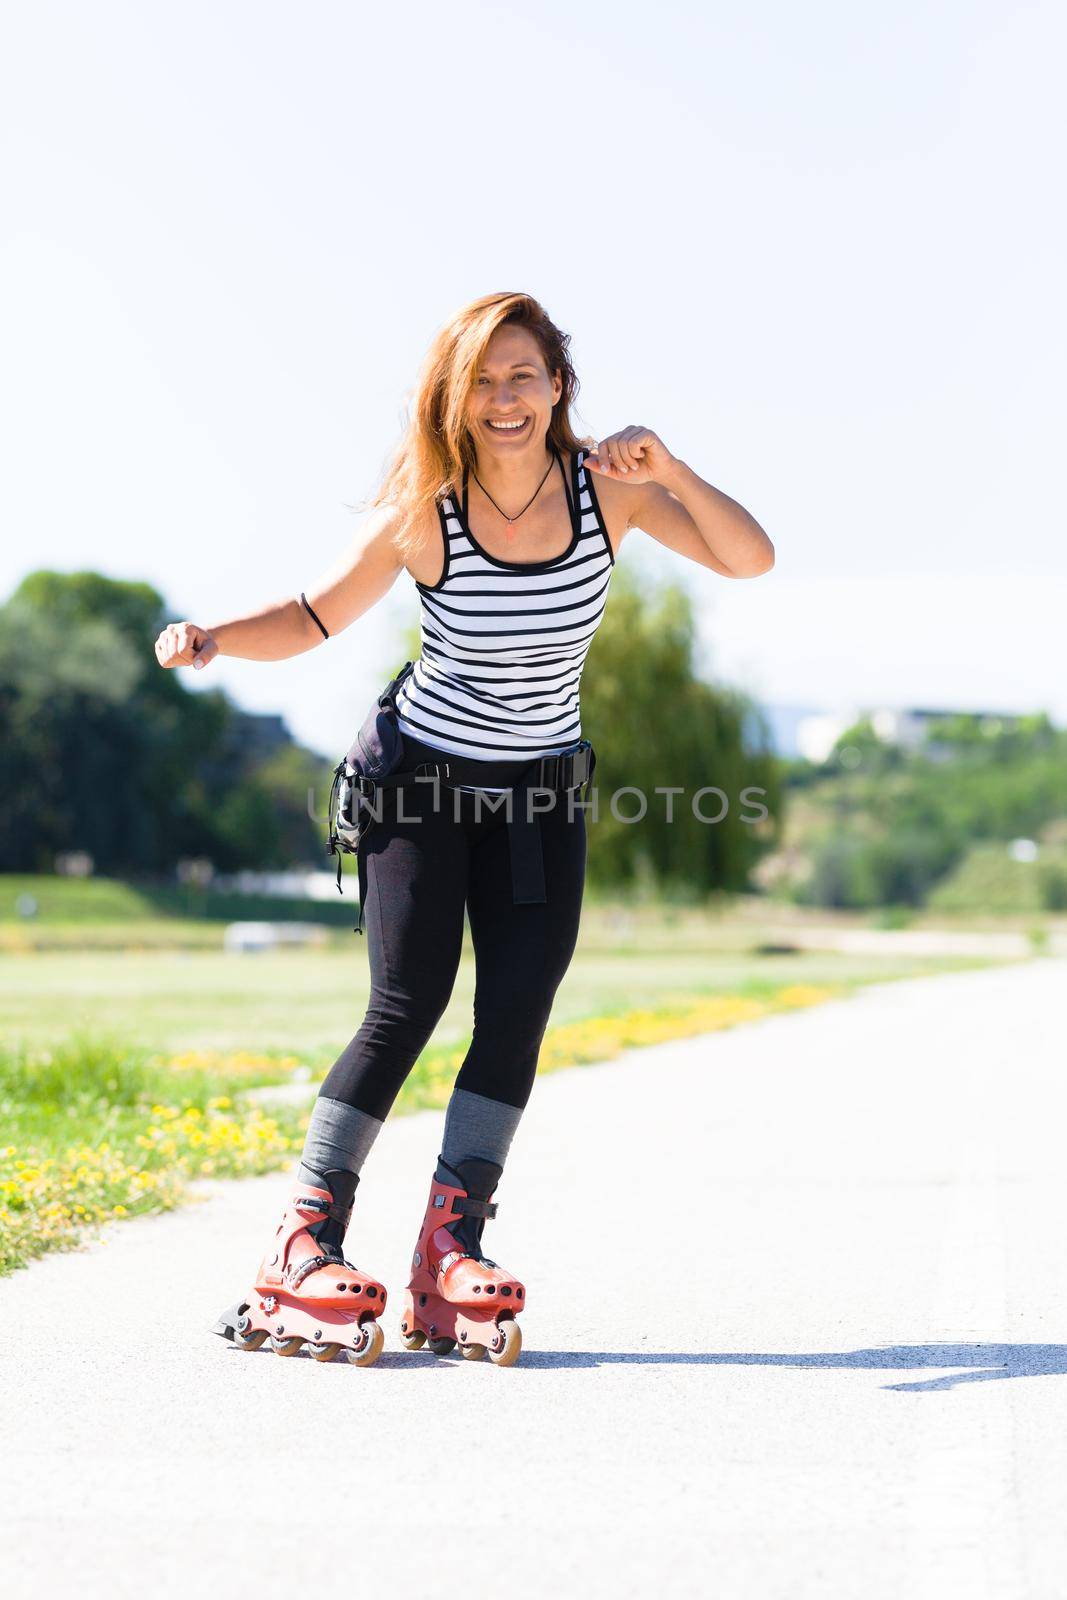 roller skating girl on asphalt road outdoors on a hot summer day by kokimk